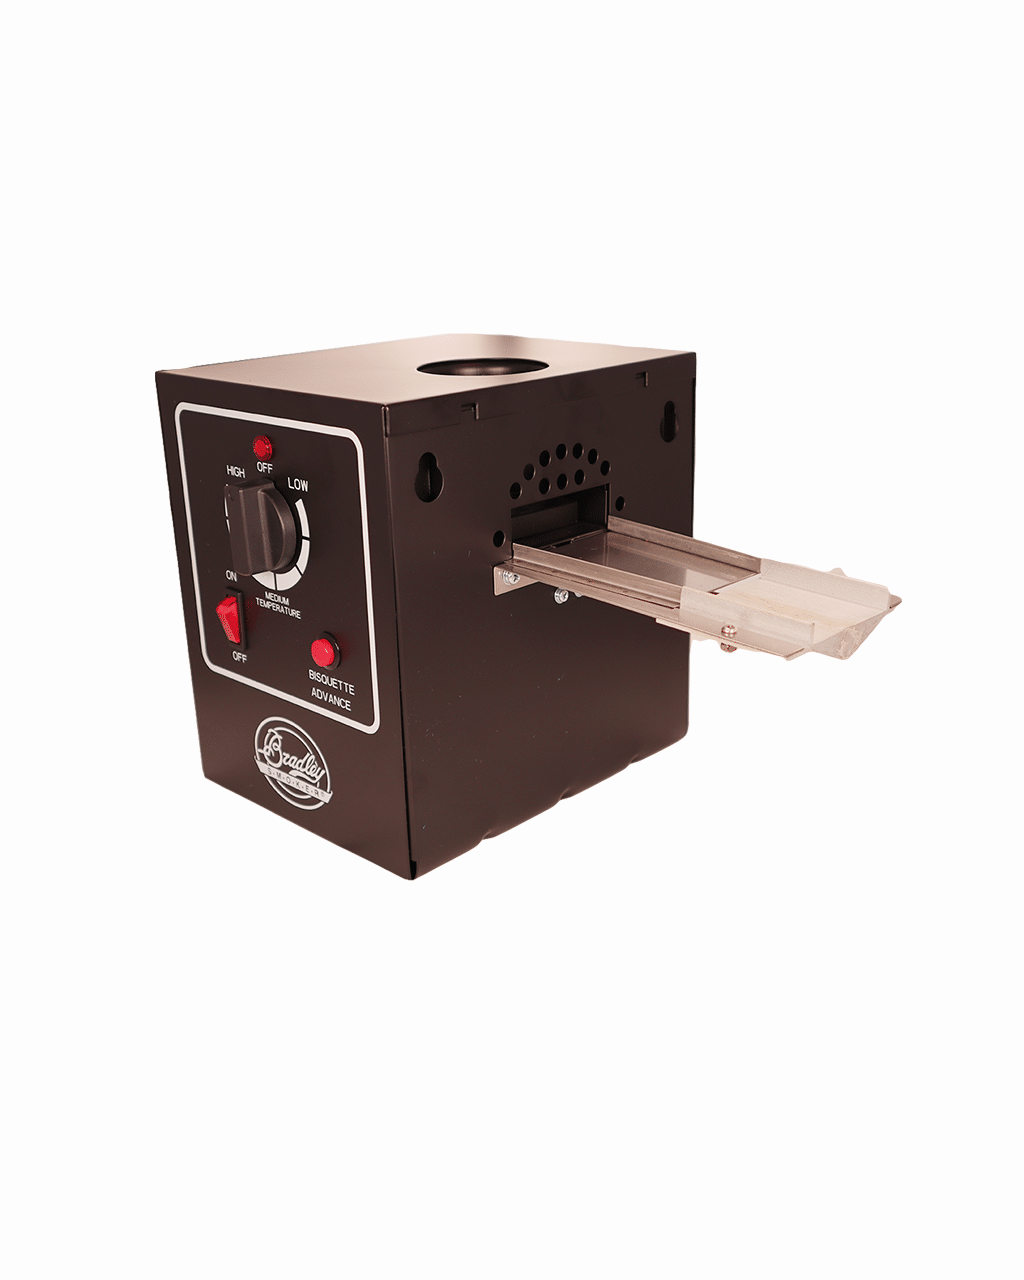 Bradley Digital Smoker NTC conersion Kit